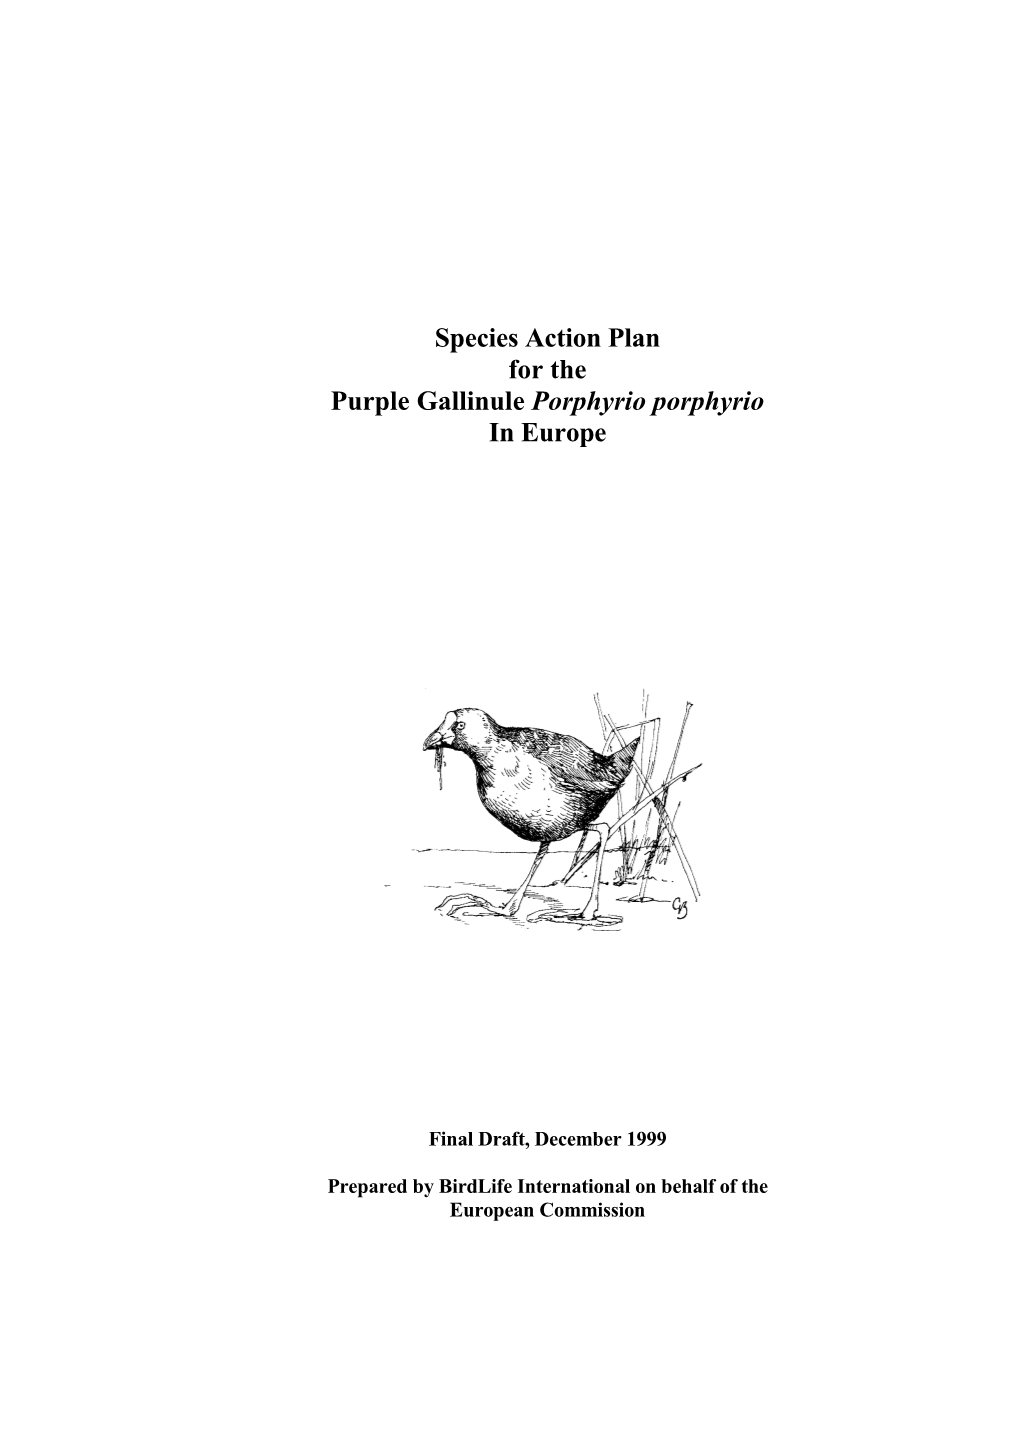 Species Action Plan for the Purple Gallinule Porphyrio Porphyrio in Europe